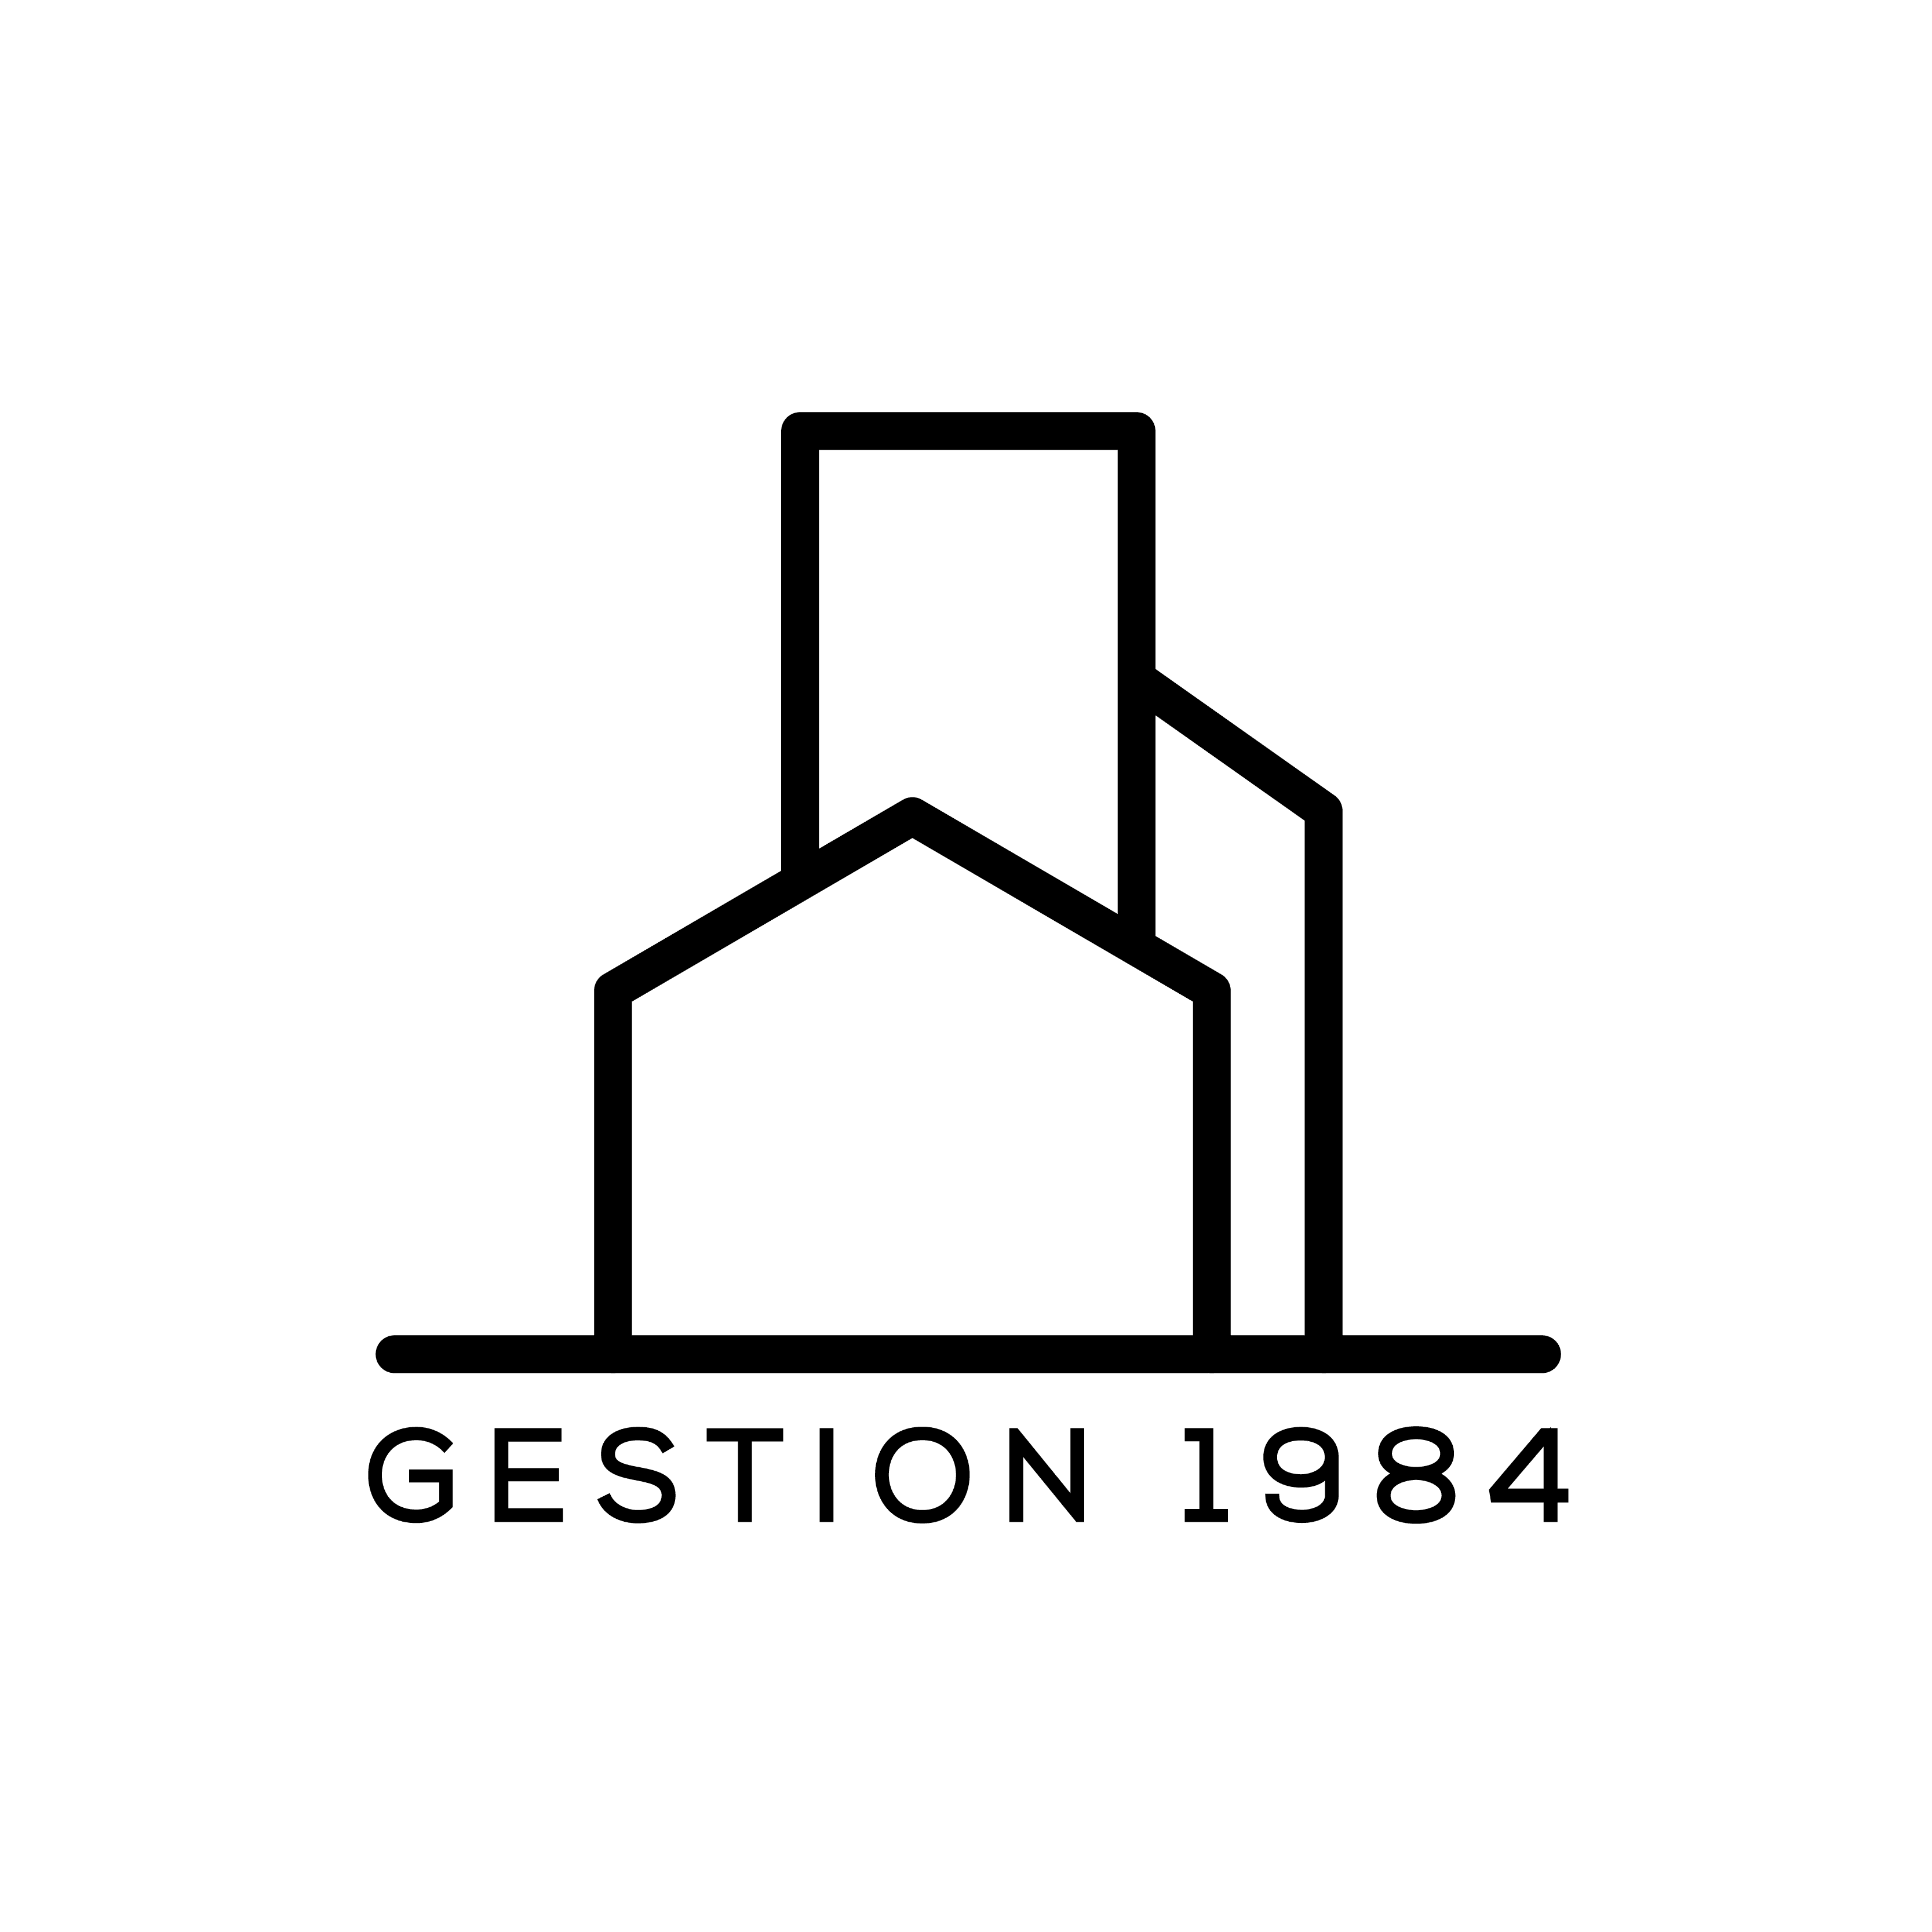 Gestion 1984-01